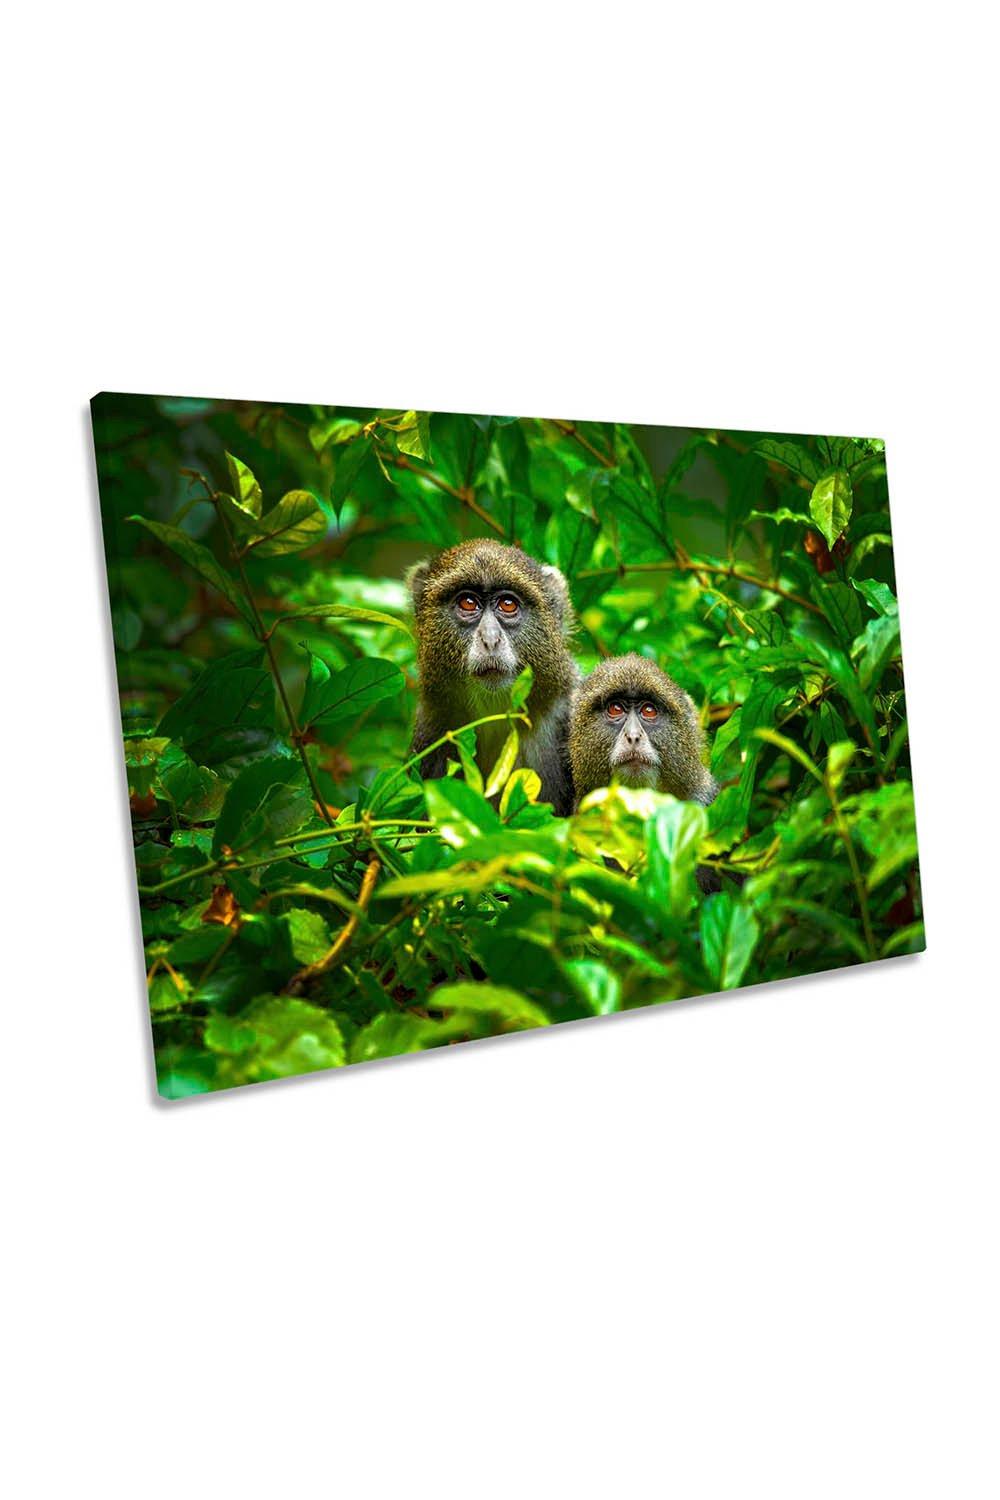 Monkeys Watching Green Jungle Canvas Wall Art Picture Print